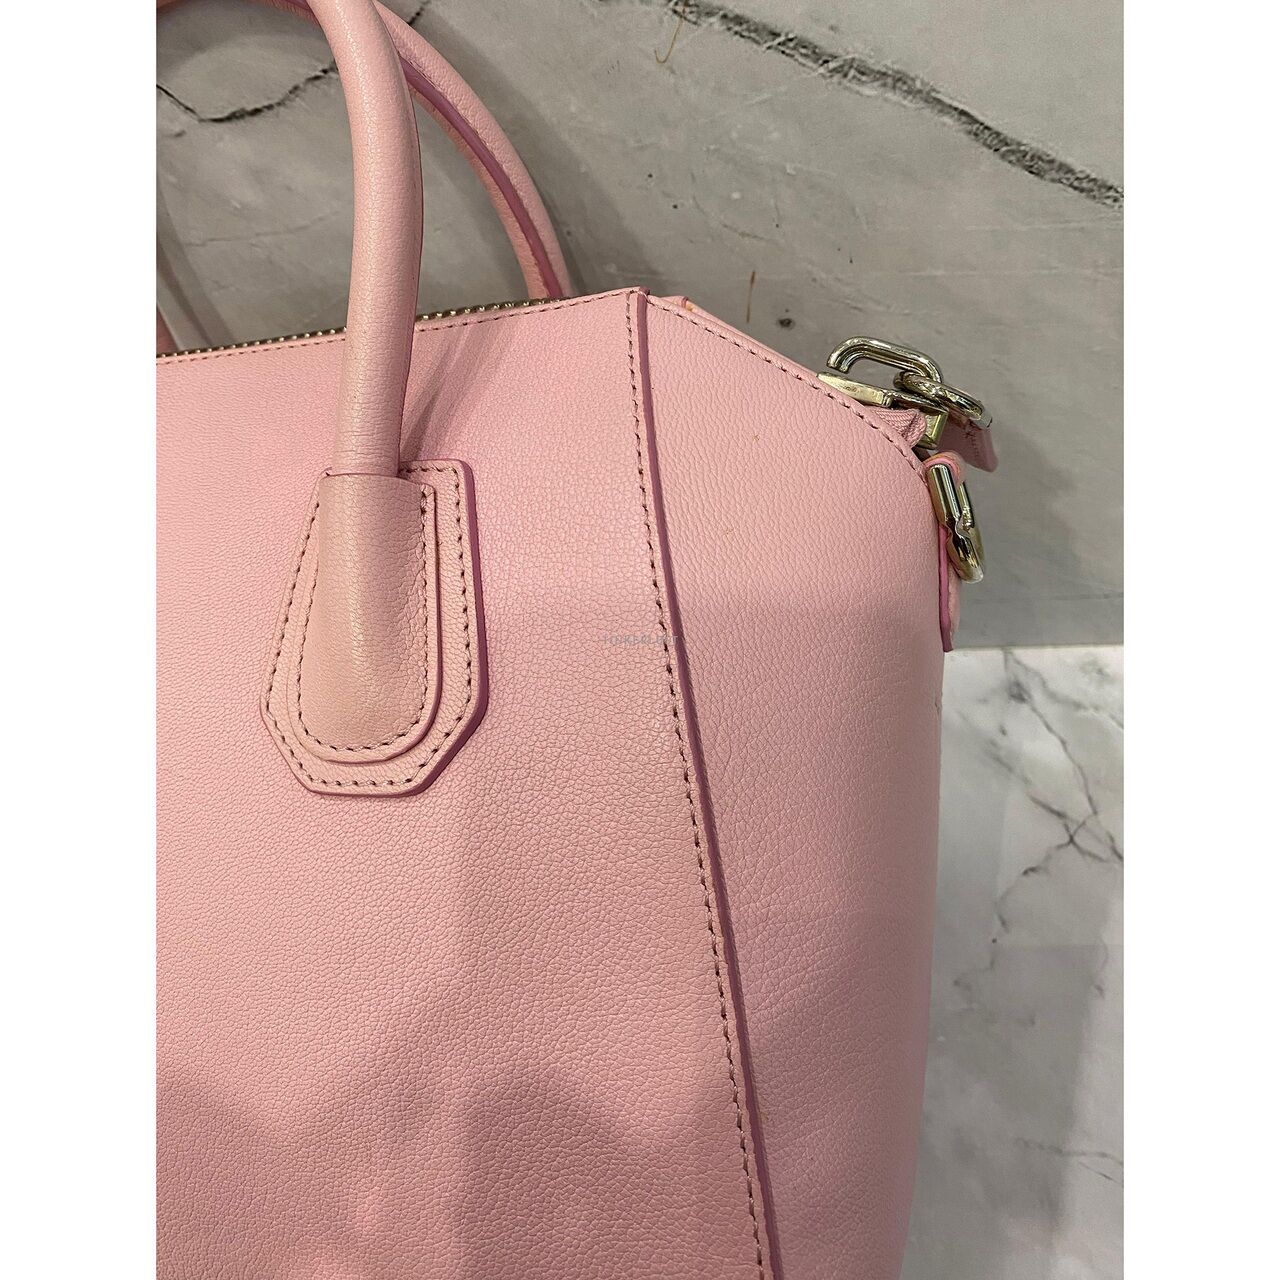 Givenchy Antigona Small Pink SHW Satchel